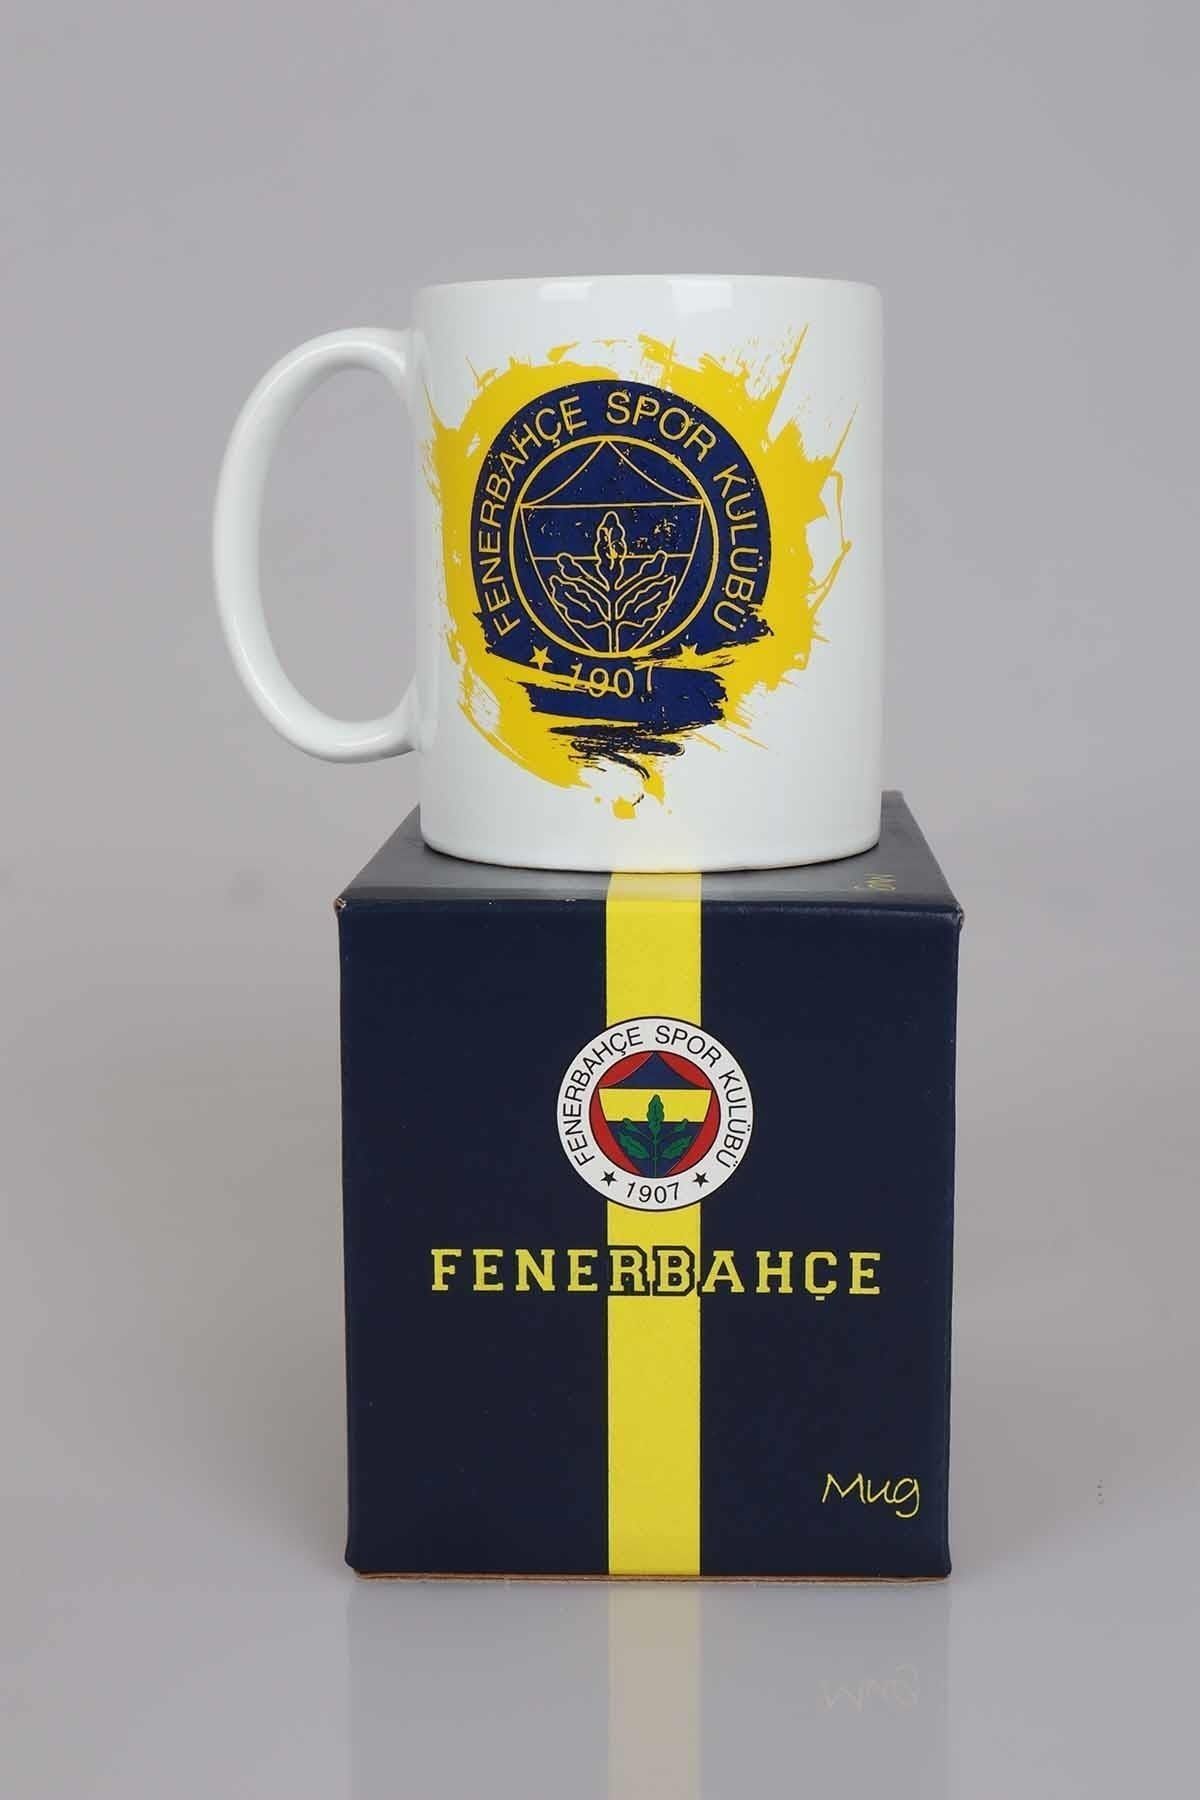 Fenerbahçe YENİ SEZON LİSANSLI FENERBAHÇE KUPA